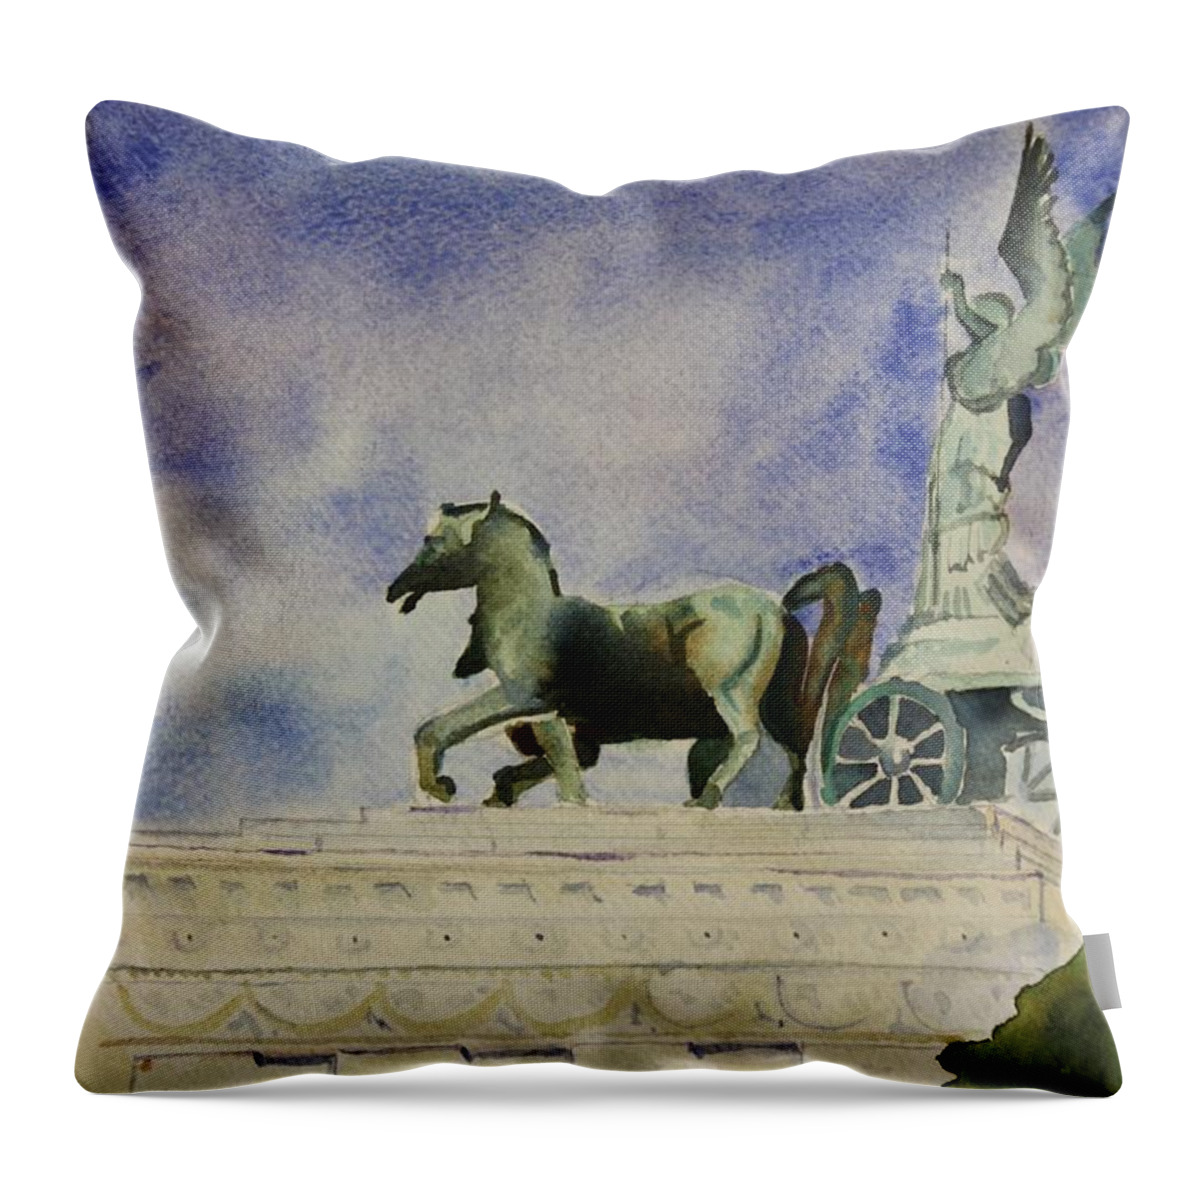 Rome Throw Pillow featuring the painting Rome souvenir by Geeta Yerra